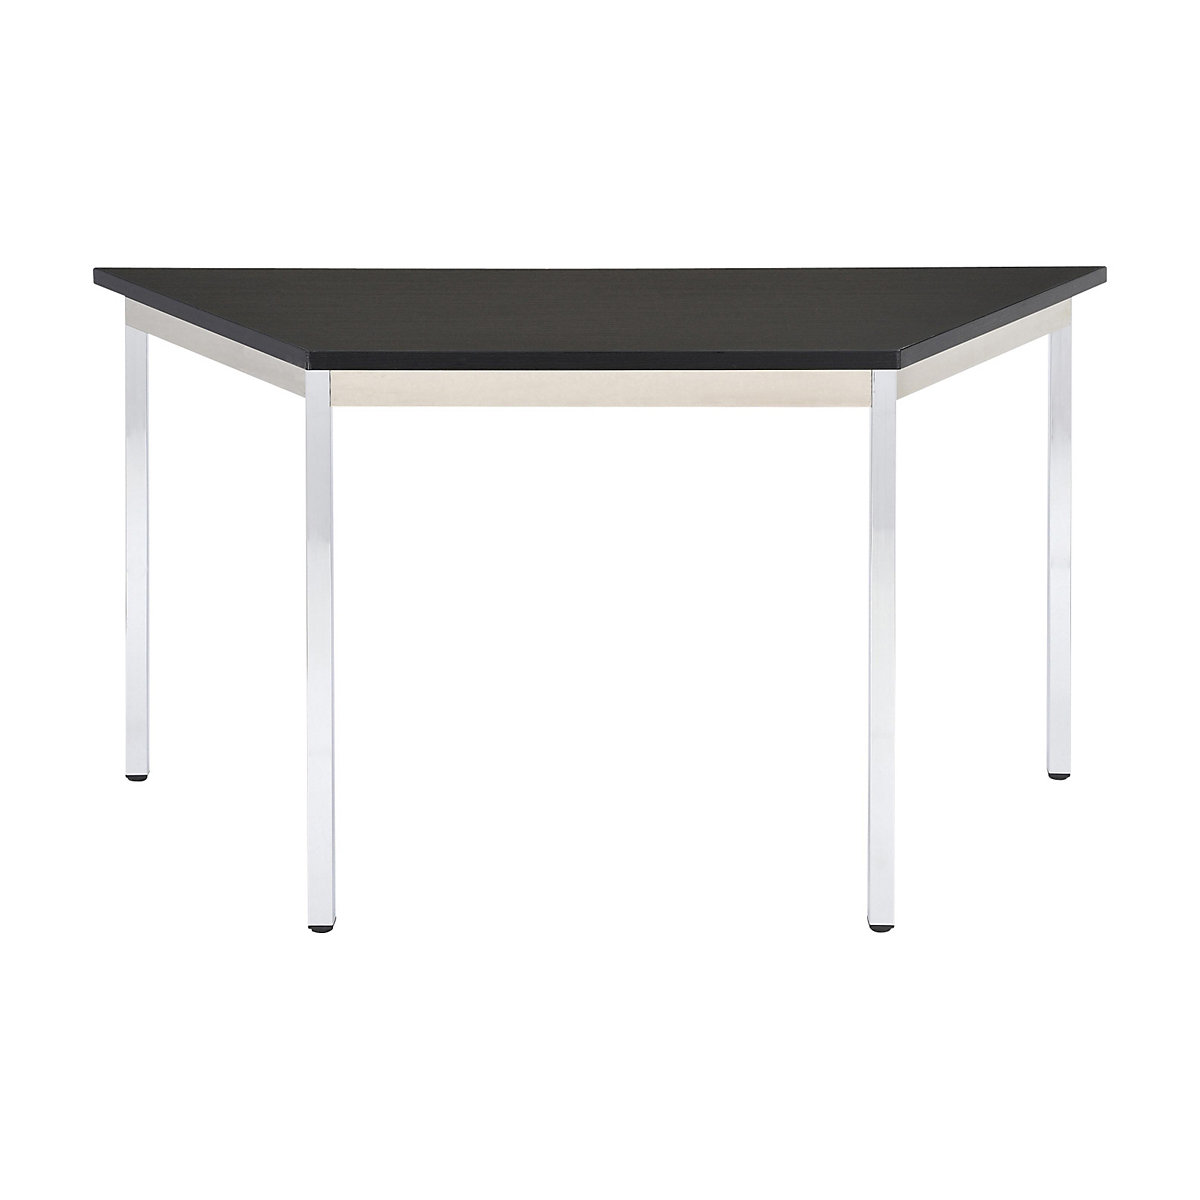 Višenamjenski stol – eurokraft basic, u obliku trapeza, VxŠxD 740 x 1200 x 600 mm, ploča u crnoj boji, kromirano postolje-14